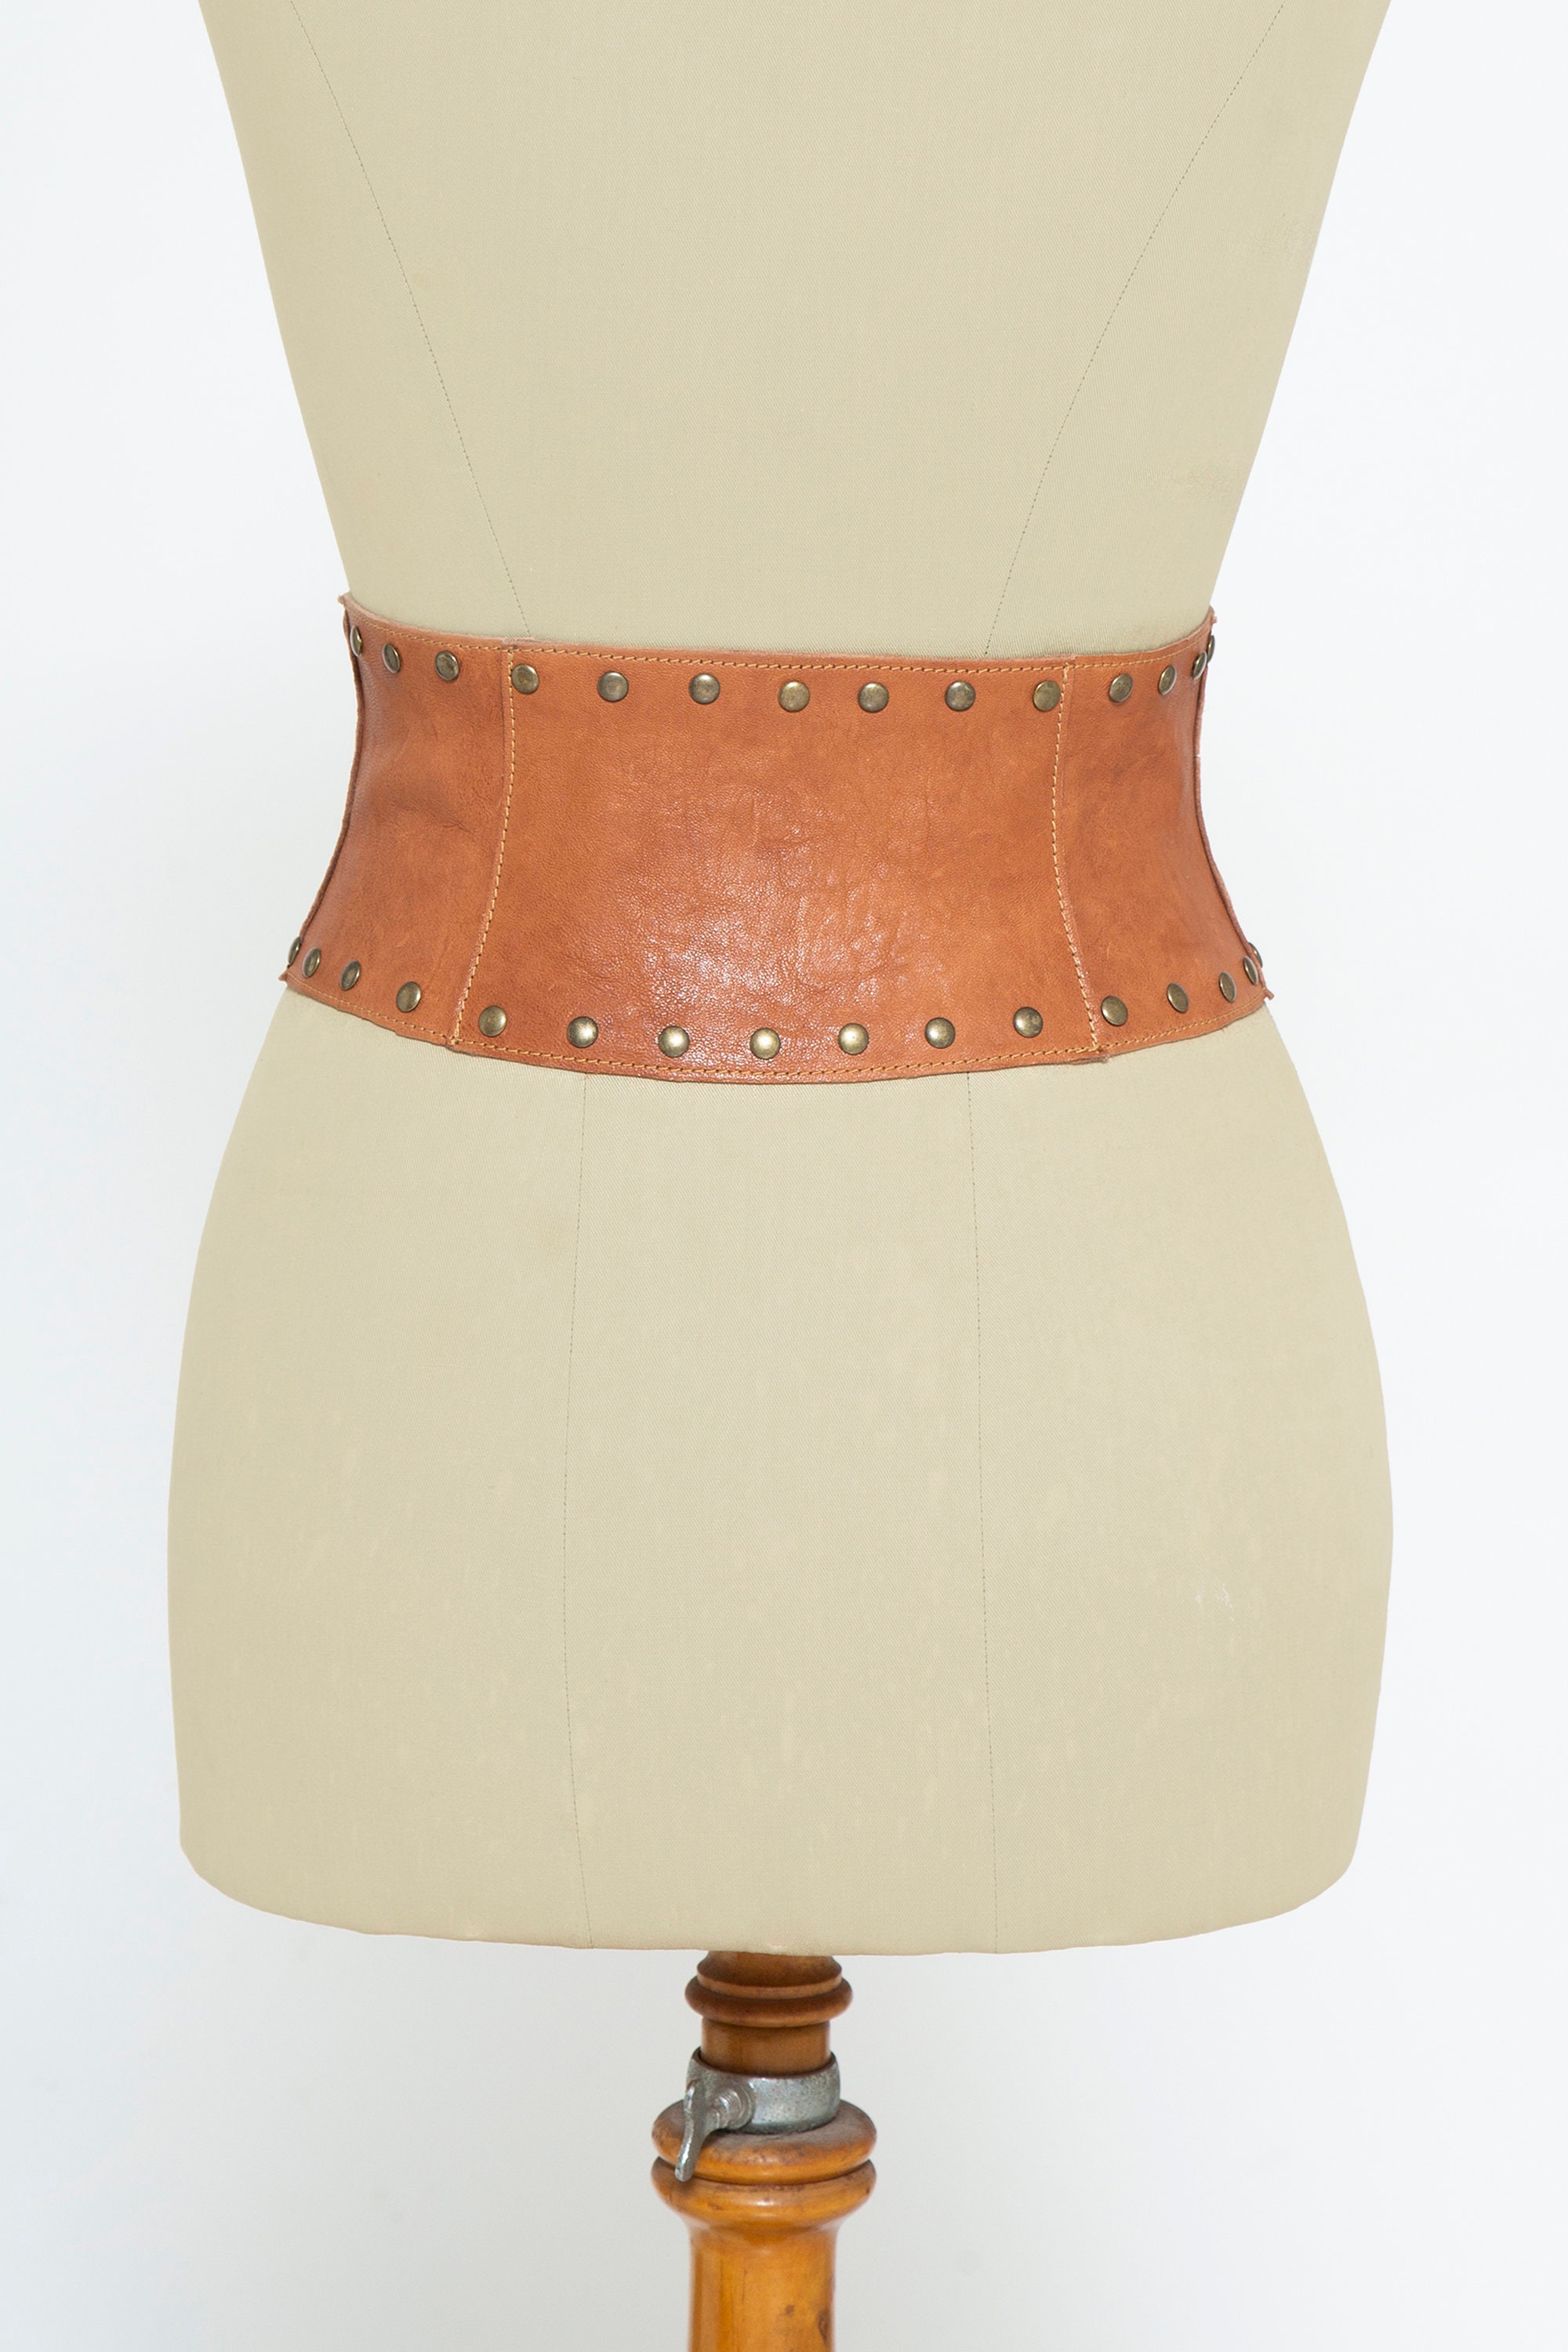 Leather Corset Belt for Dress, Brown Waist Belt With Studs, Plus Size Corset  Belt, Wide Leather Belt. -  Denmark